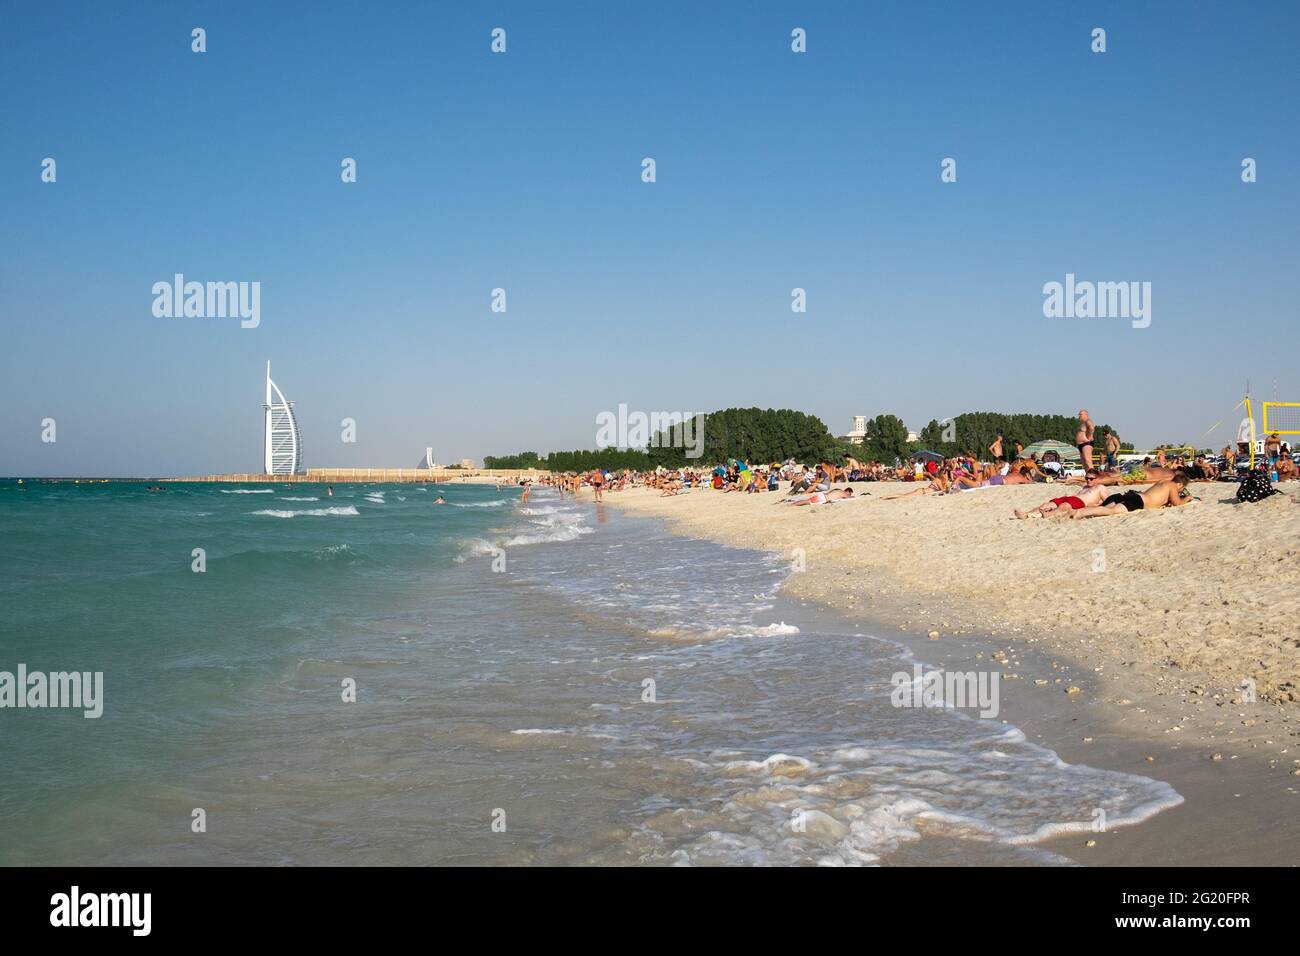 People sunbathing on the beach in Dubai with the white sail of Burj Al Arab in the background. Dubai, UAE. Stock Photo